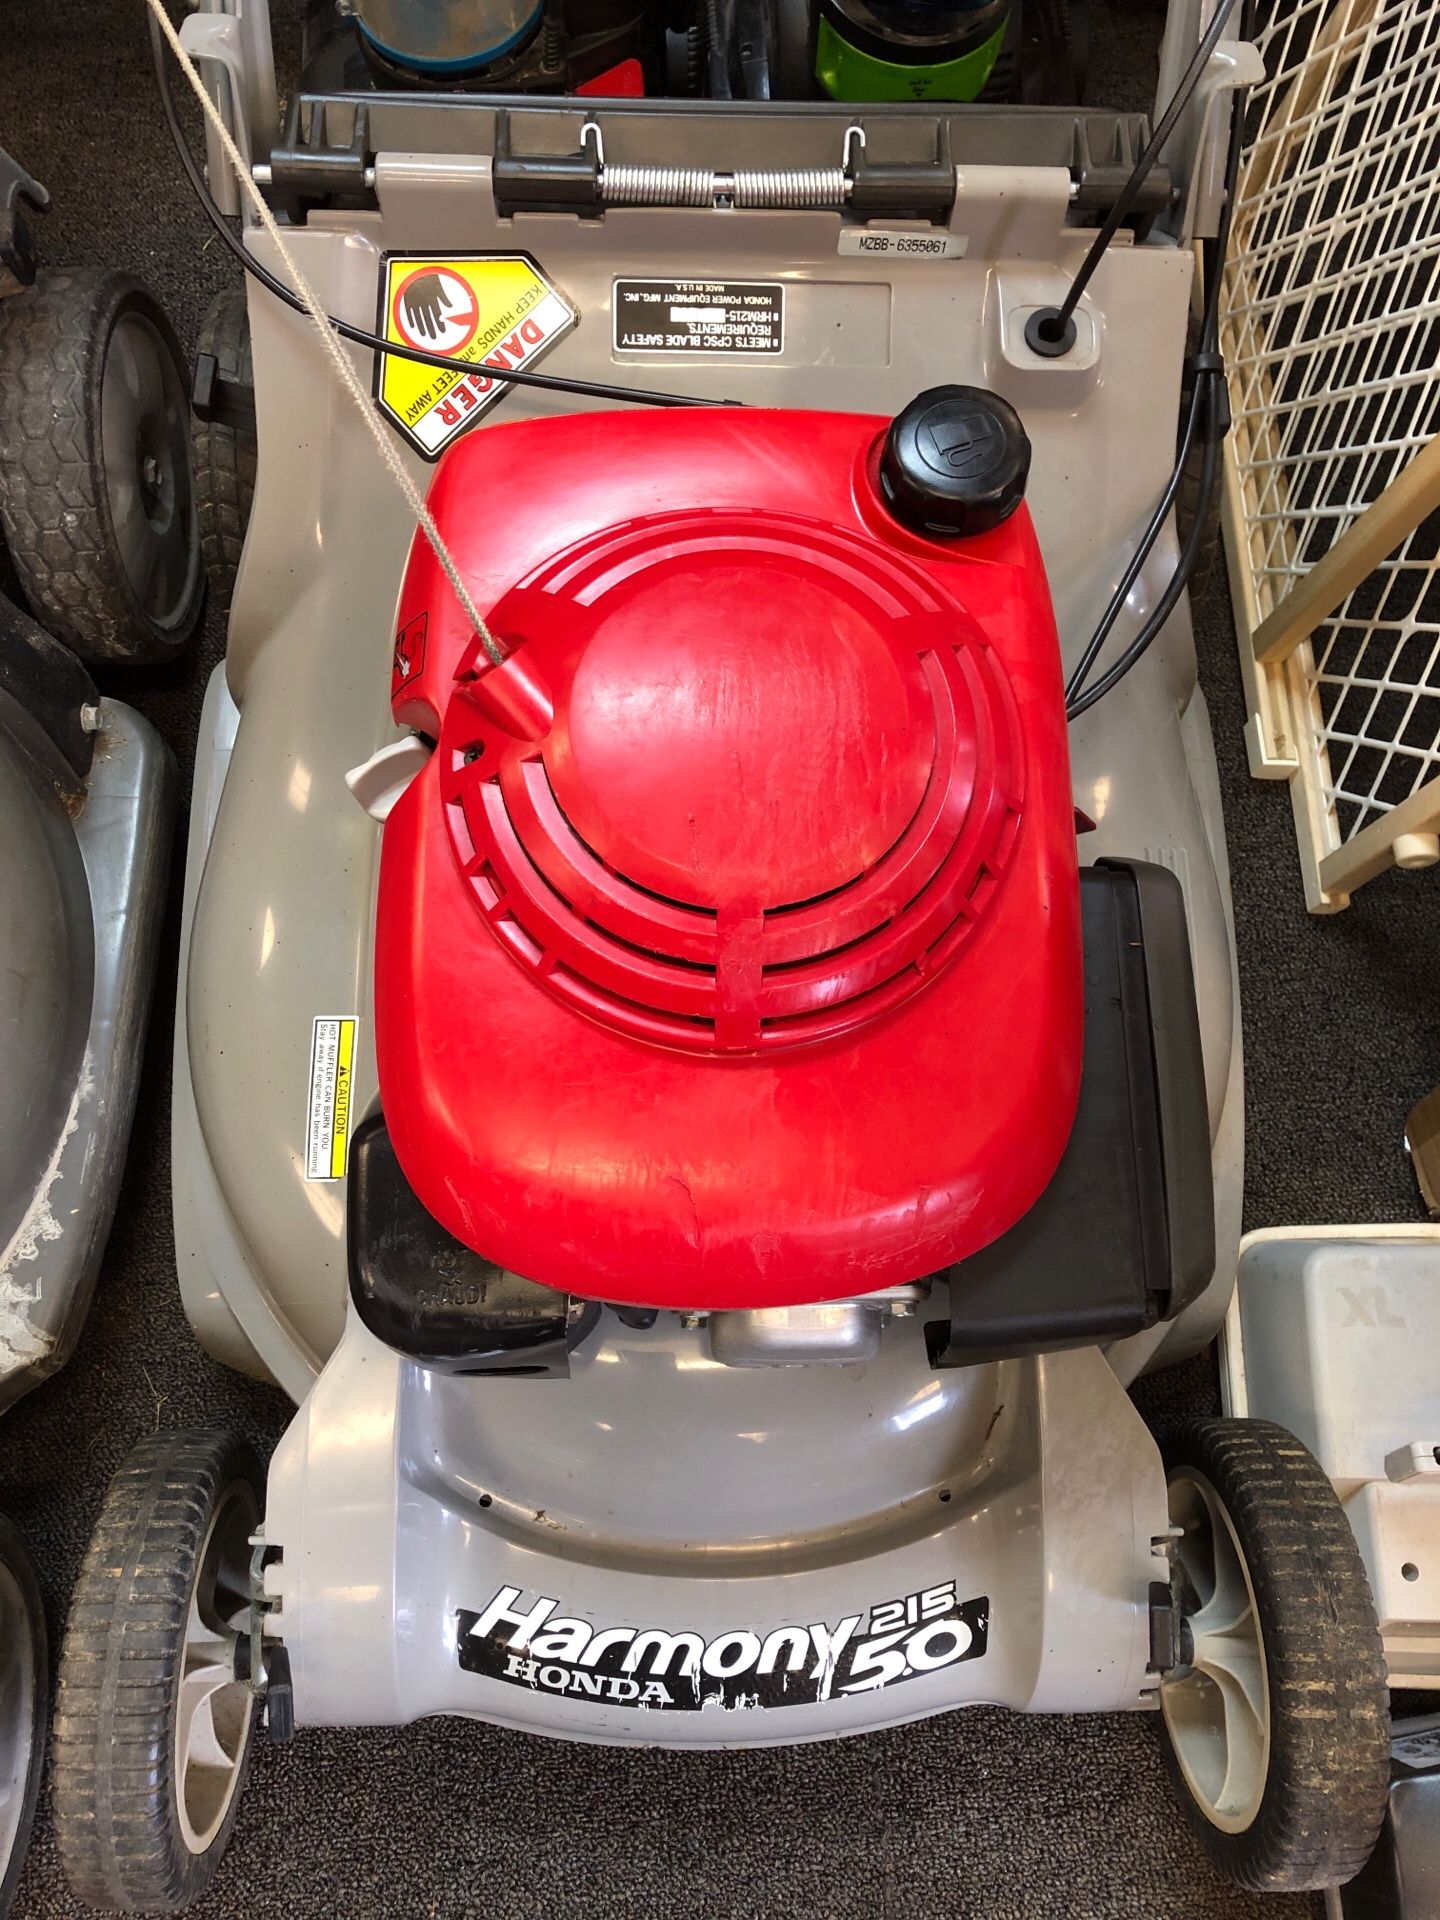 Honda Harmony 215 5.0 Self Propelled Lawn Mower